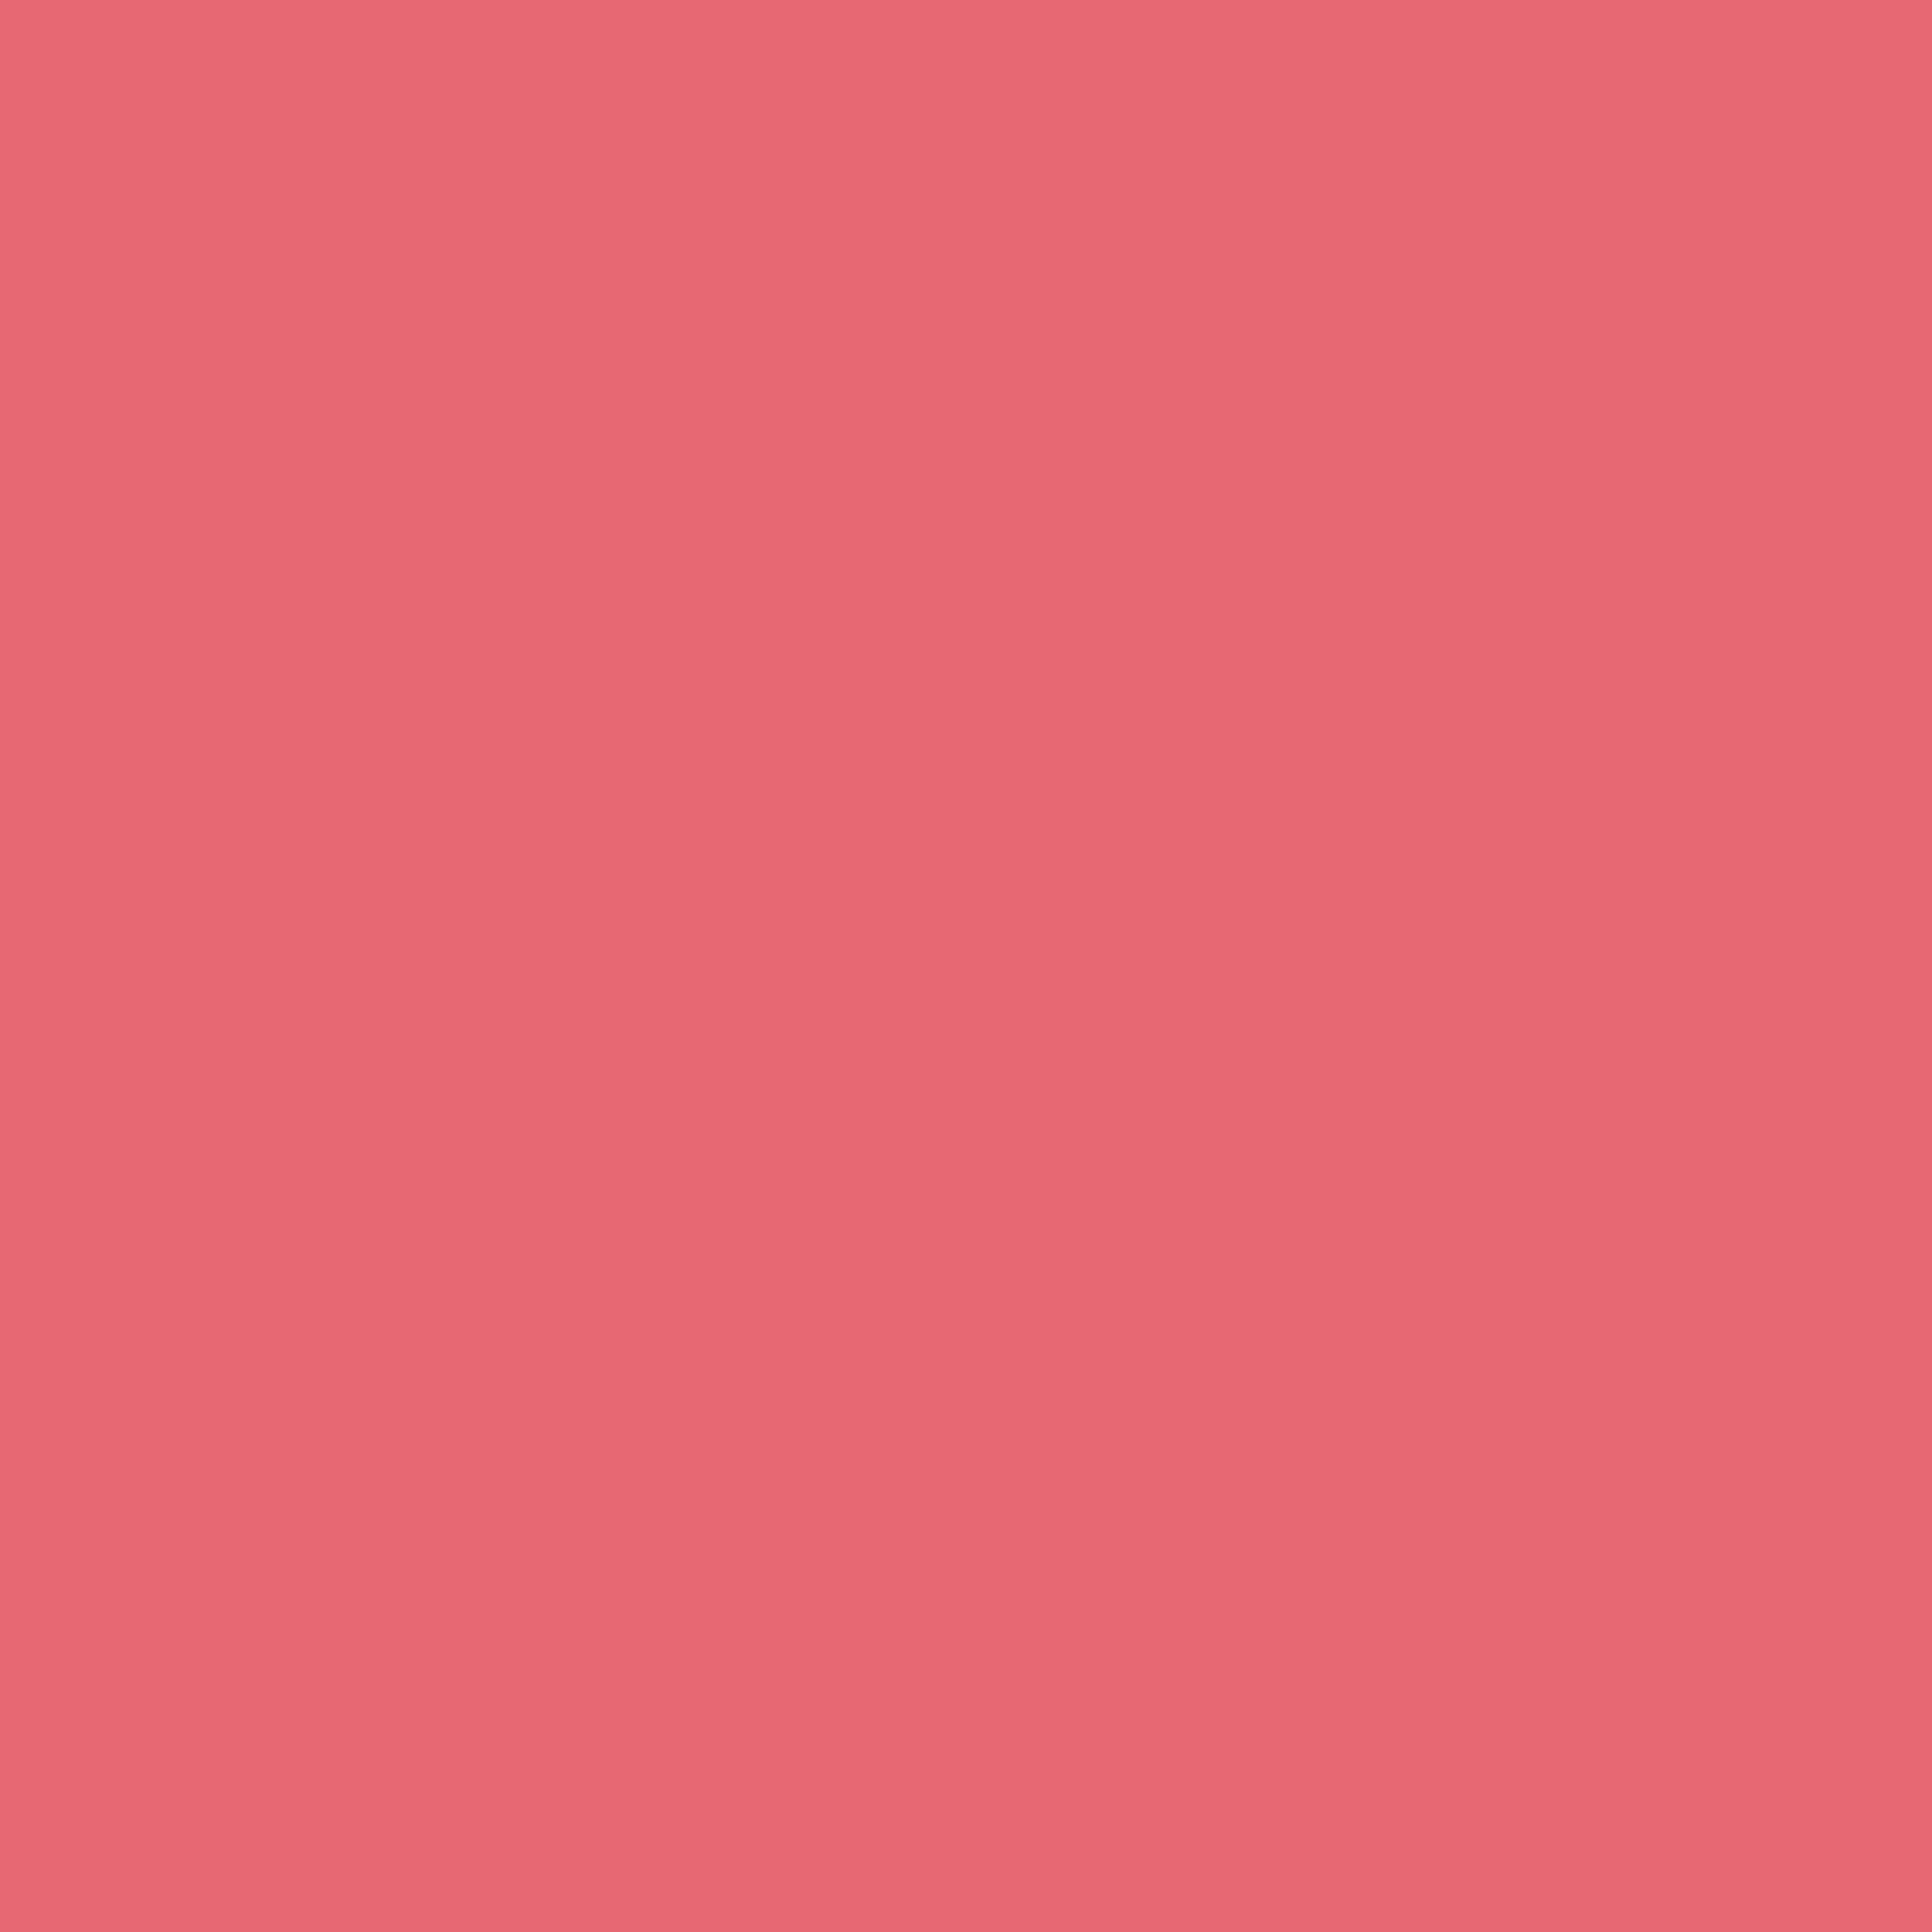 3600x3600 Light Carmine Pink Solid Color Background